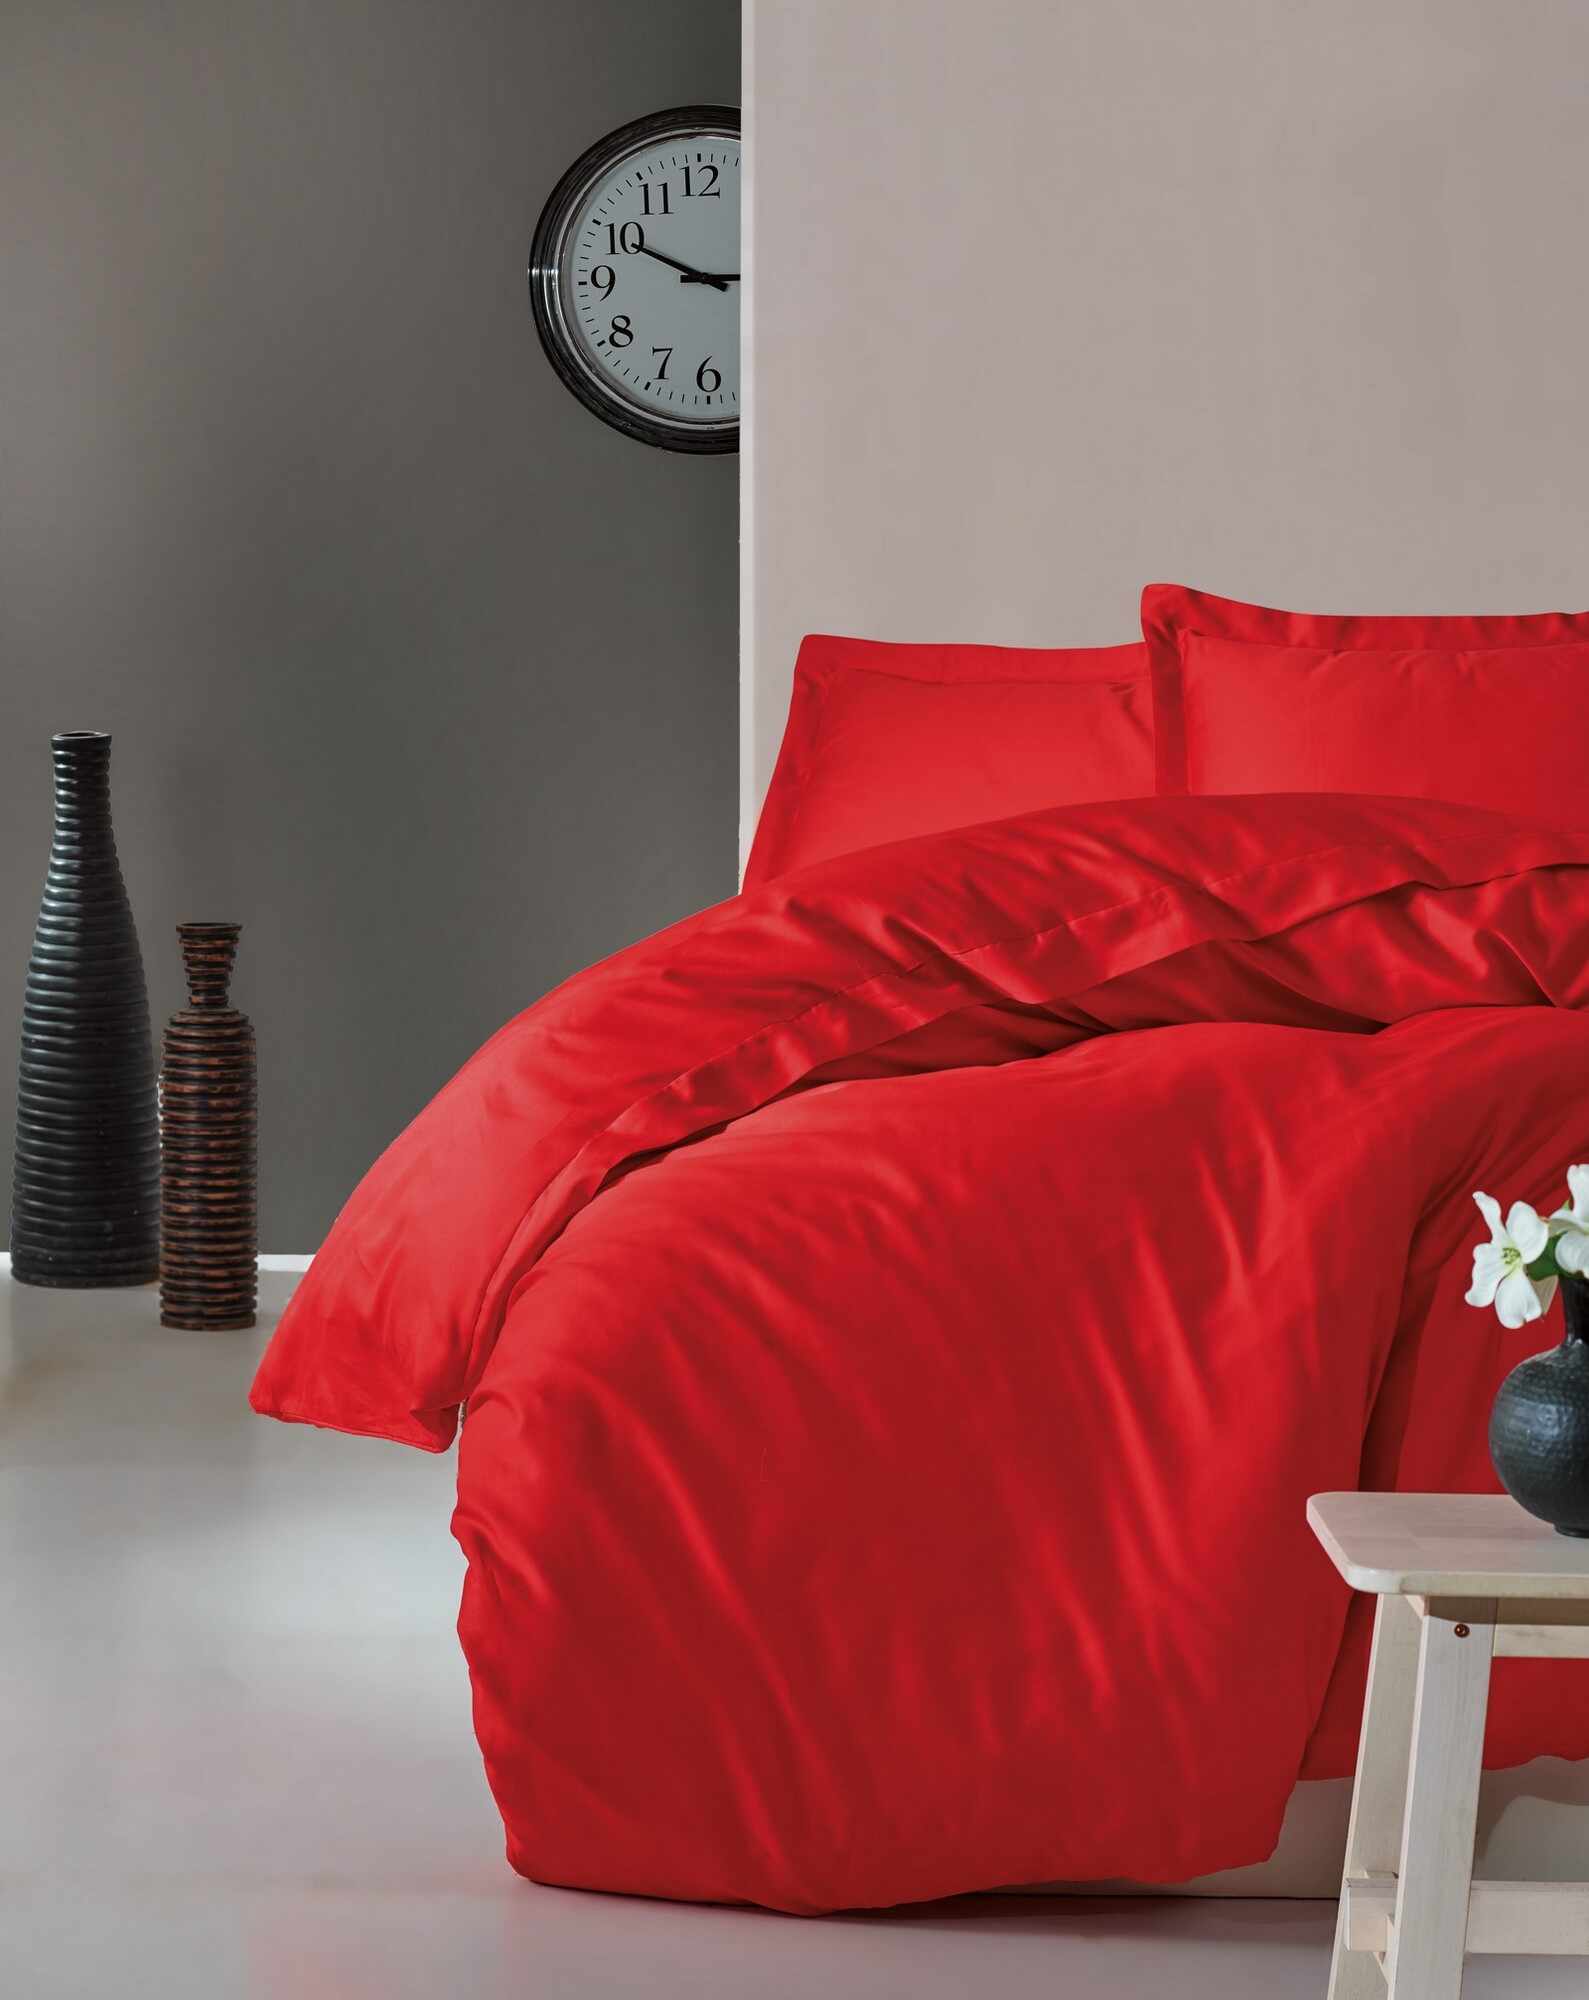  Lenjerie de pat din bumbac Satinat Premium Elegant Rosu, 200 x 220 cm la pret 500 lei 